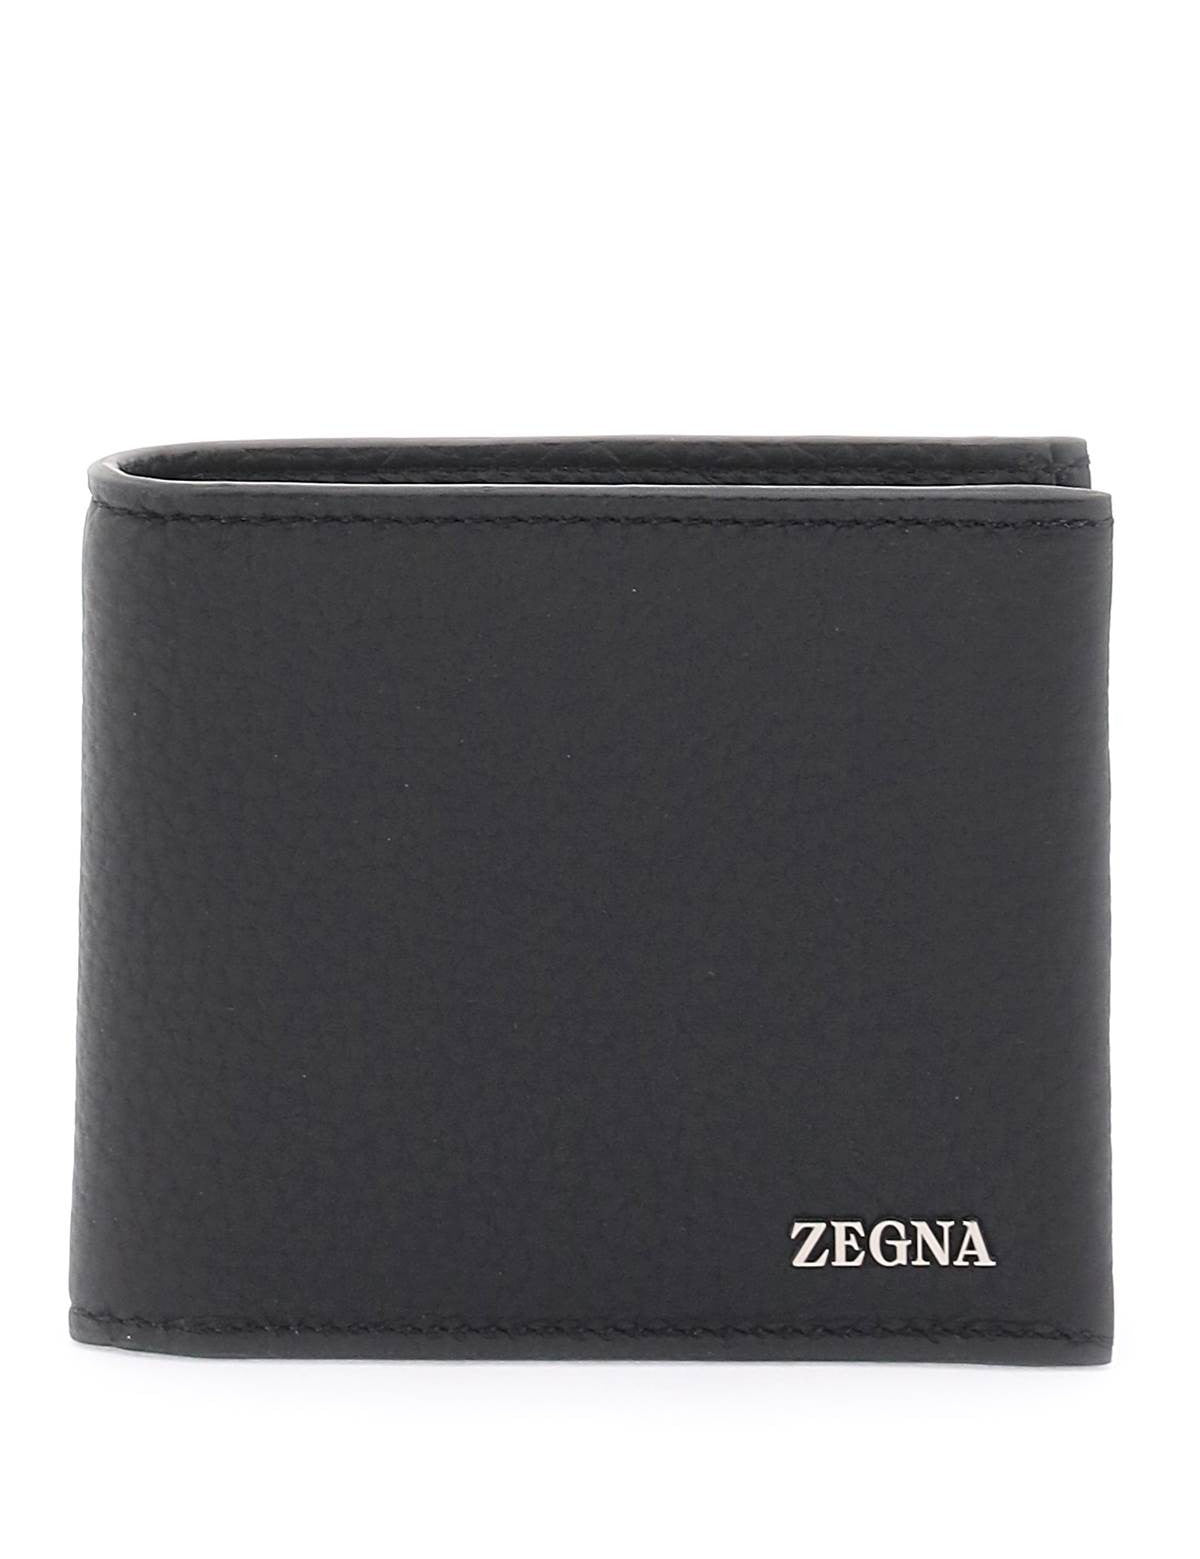 zegna-leather-bifold-wallet.jpg